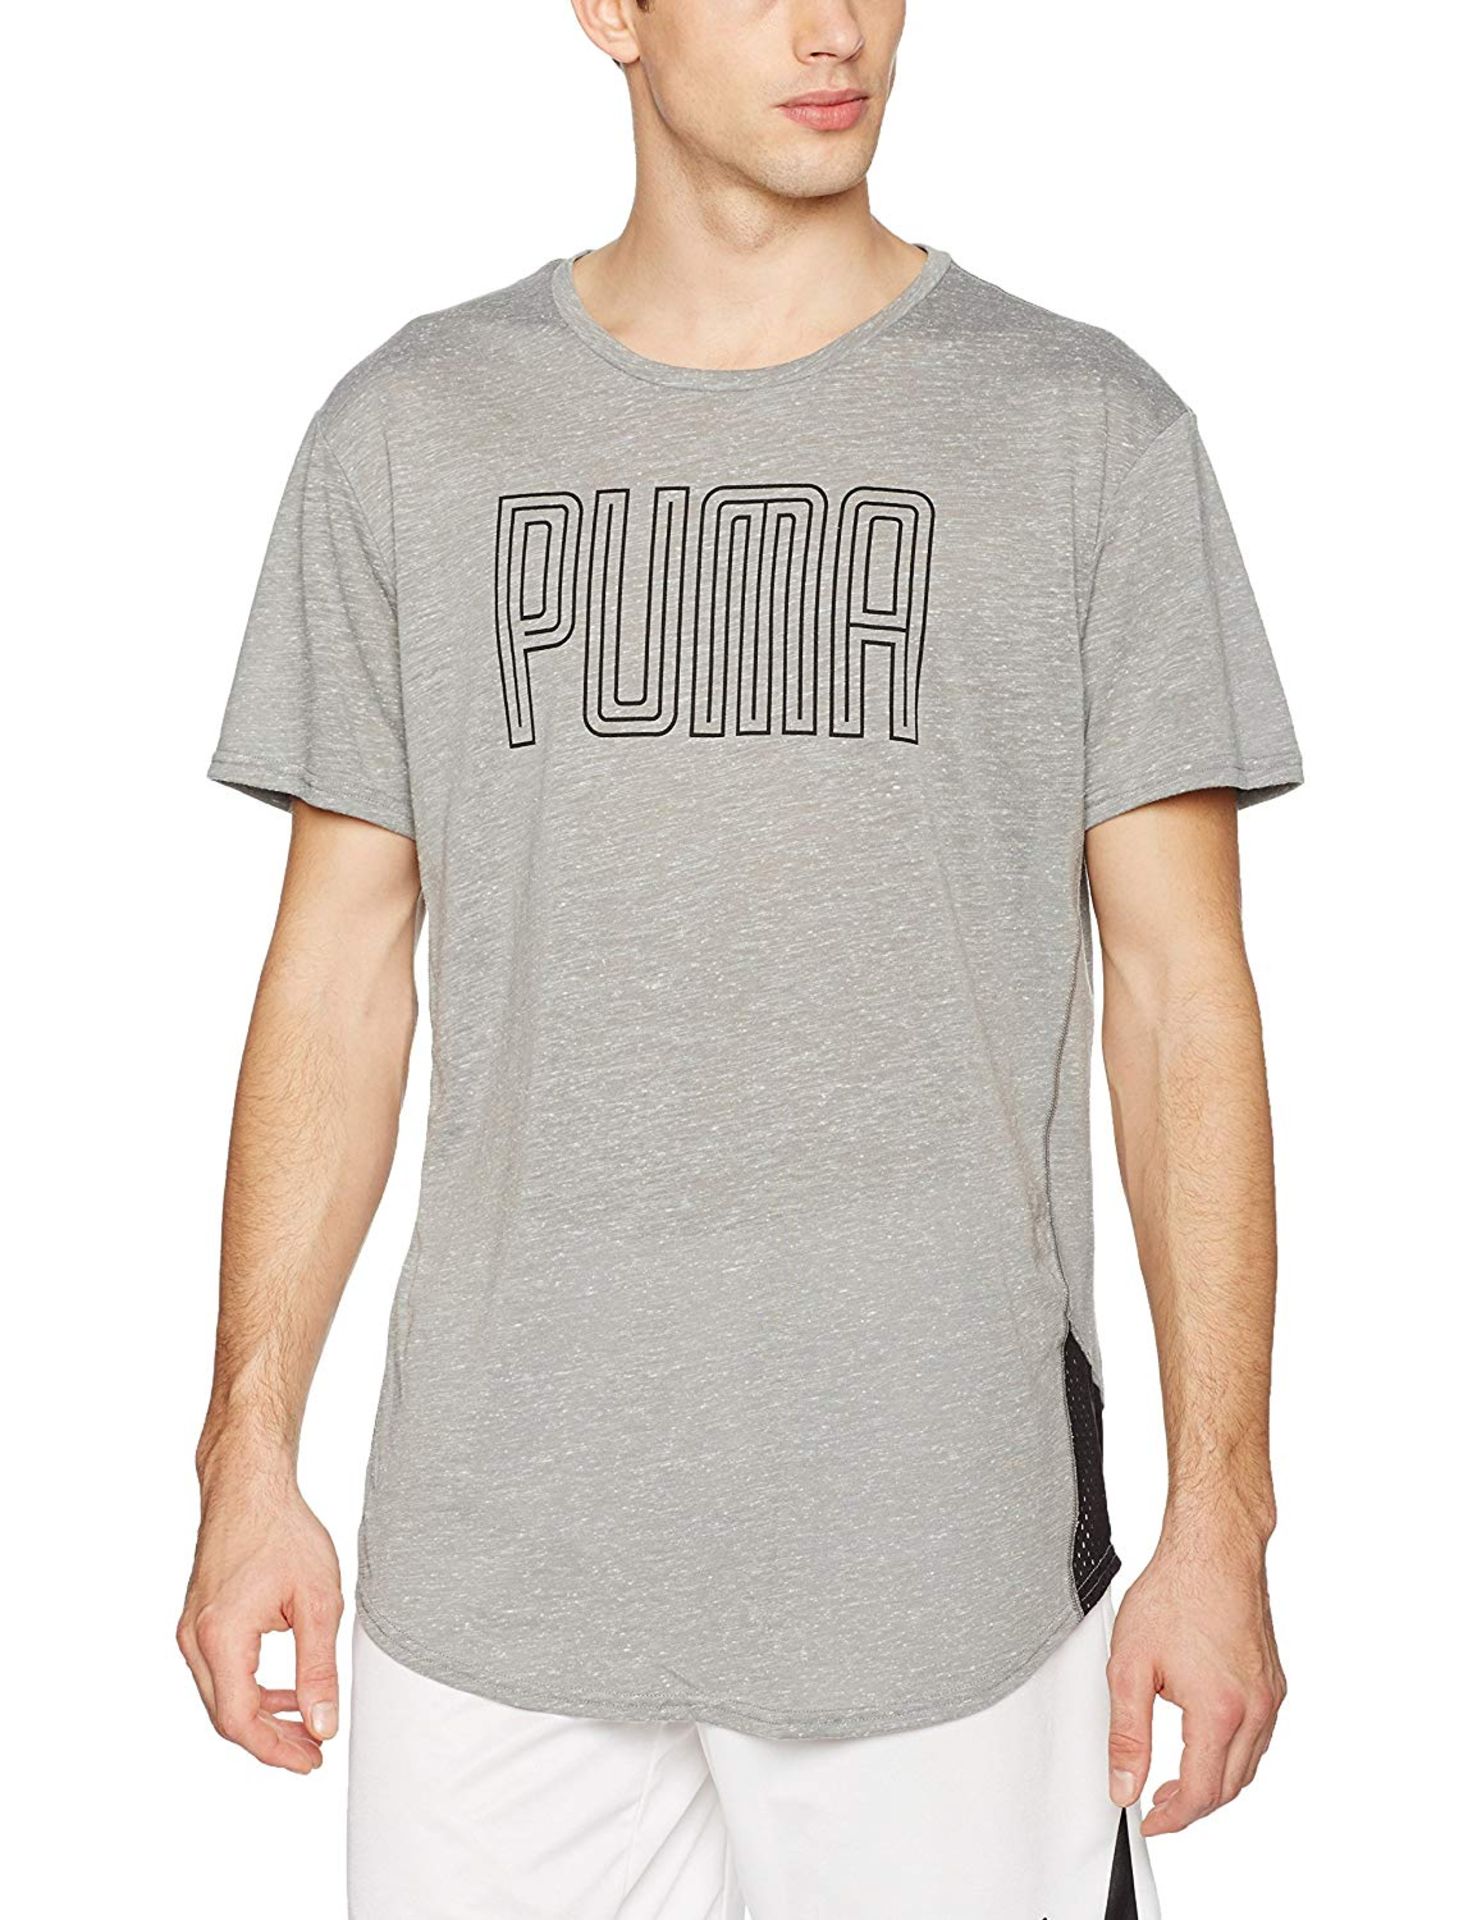 Brand new Puma Men's Dri-Release Novelty Tee T-Shirt Size L